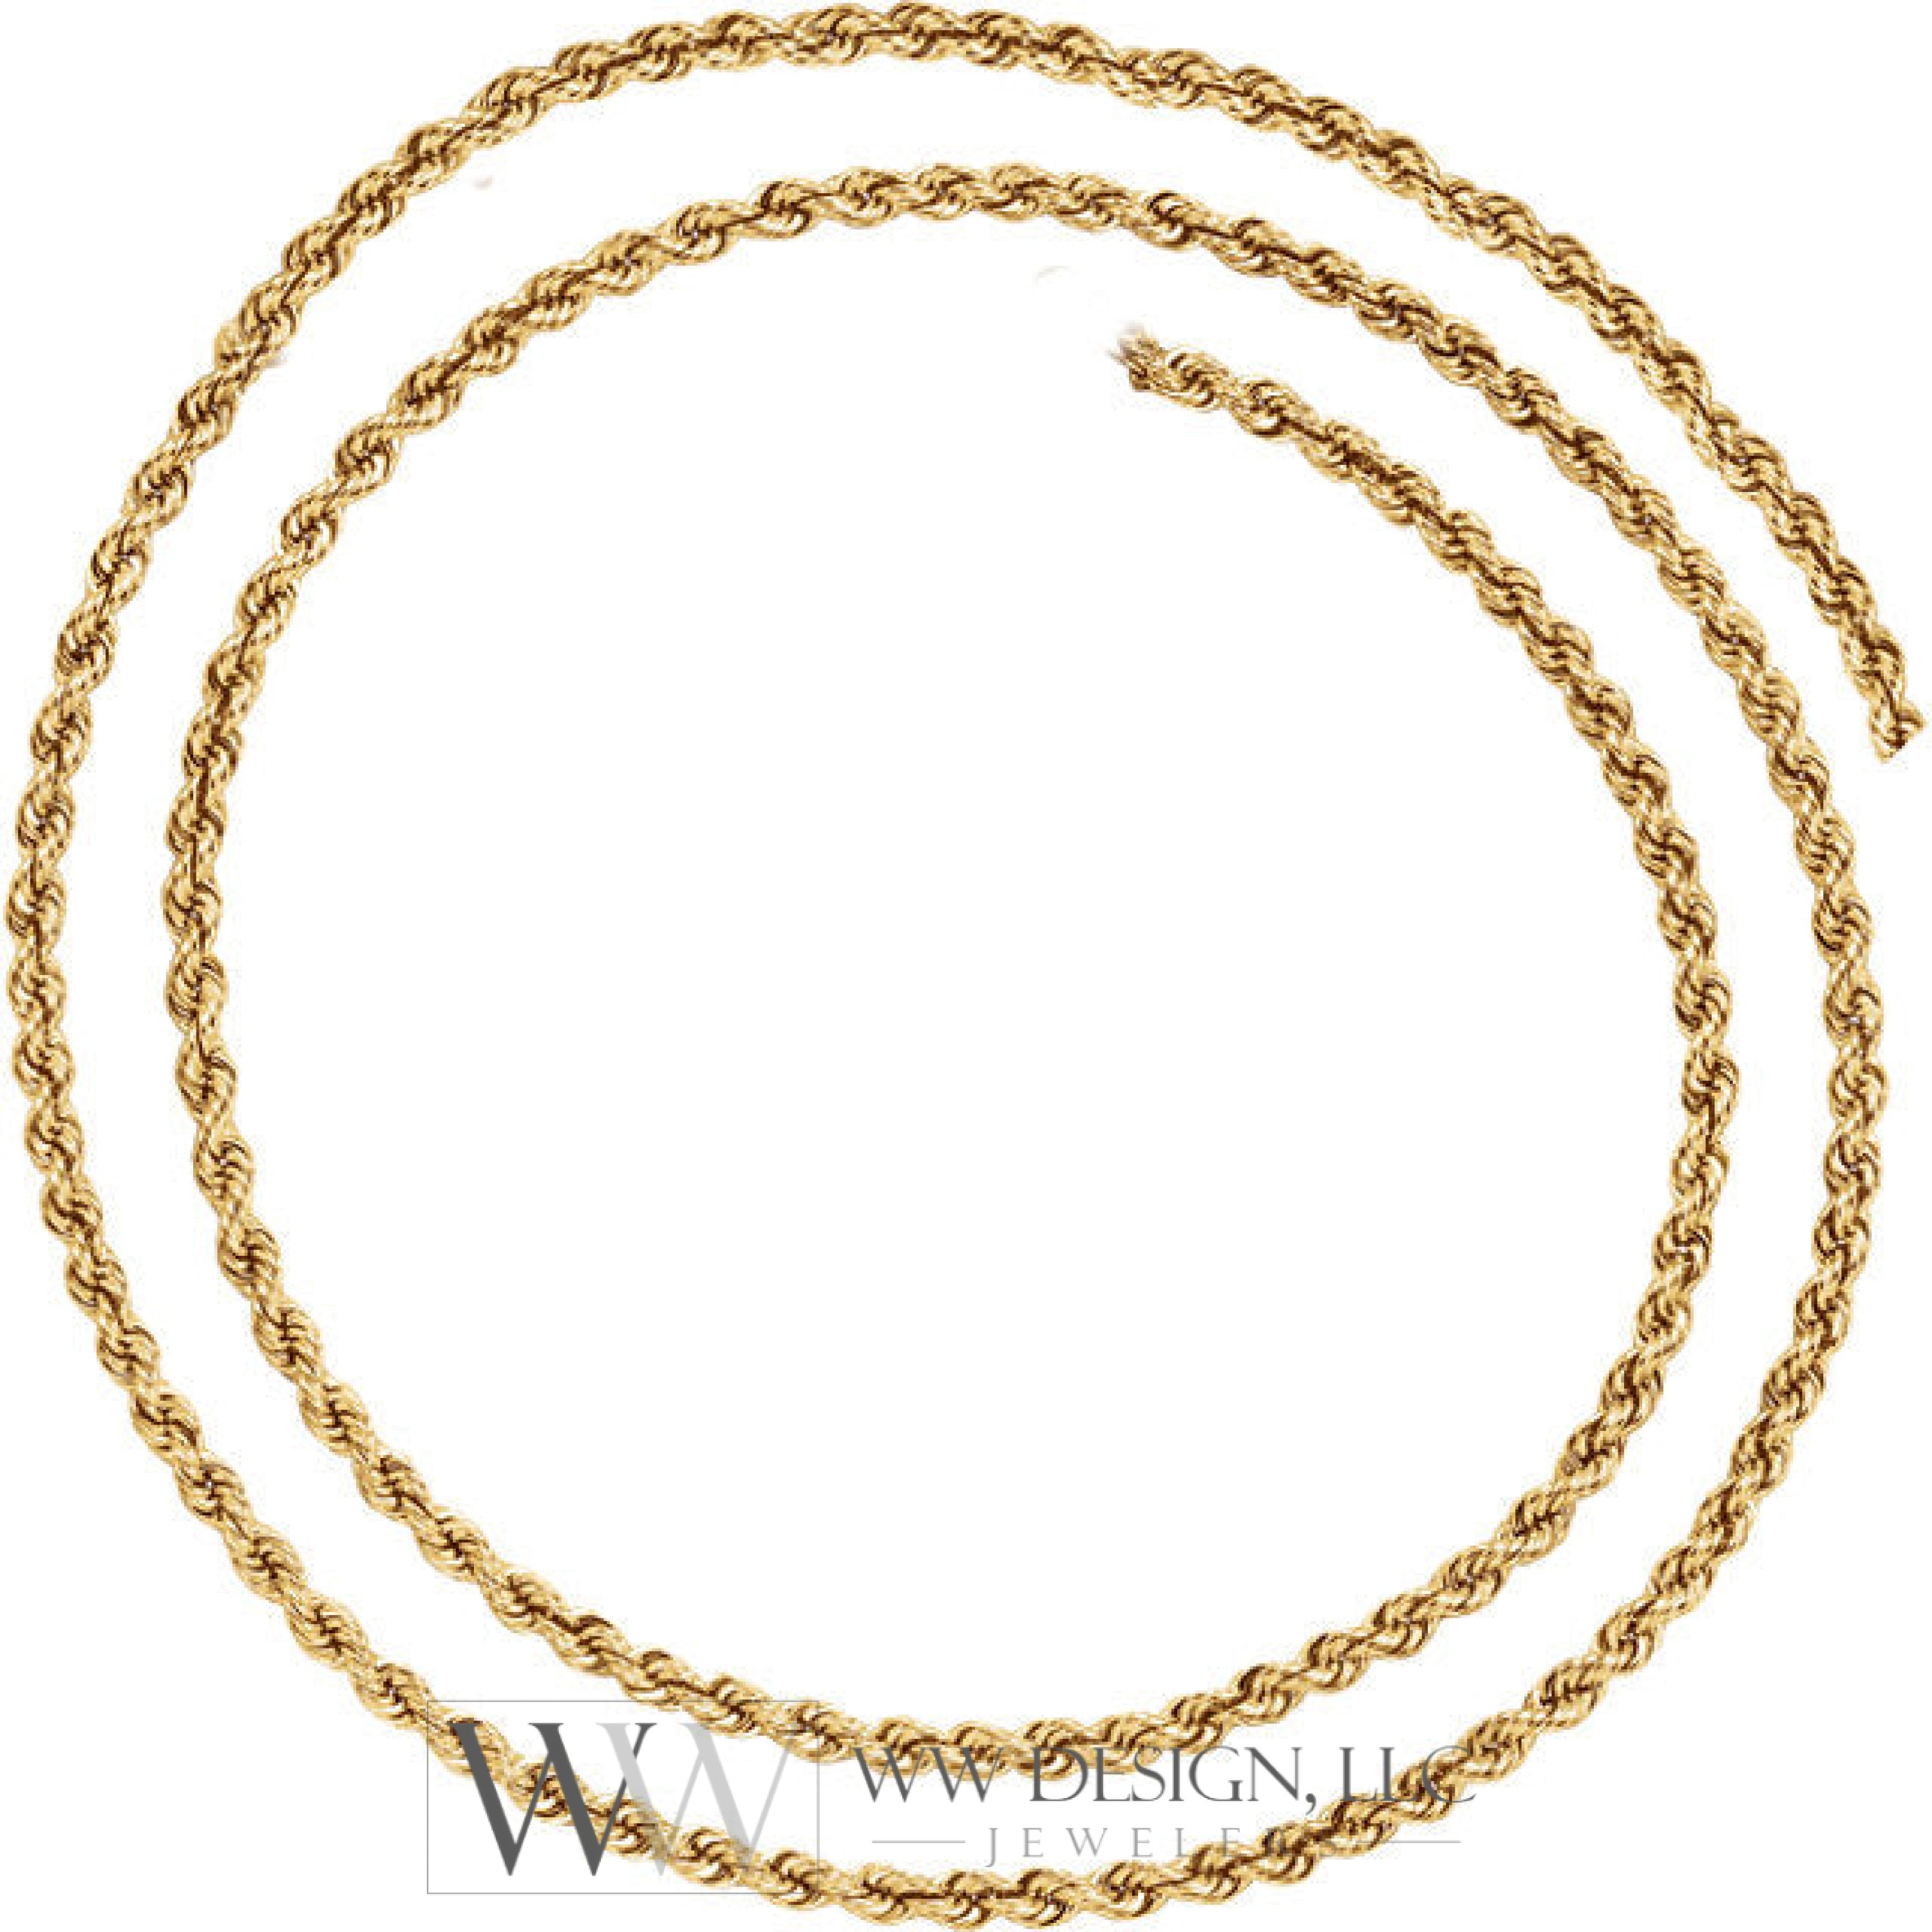 3 mm Rope Chain - 14k Gold (Yellow or White) - WW Design, LLC